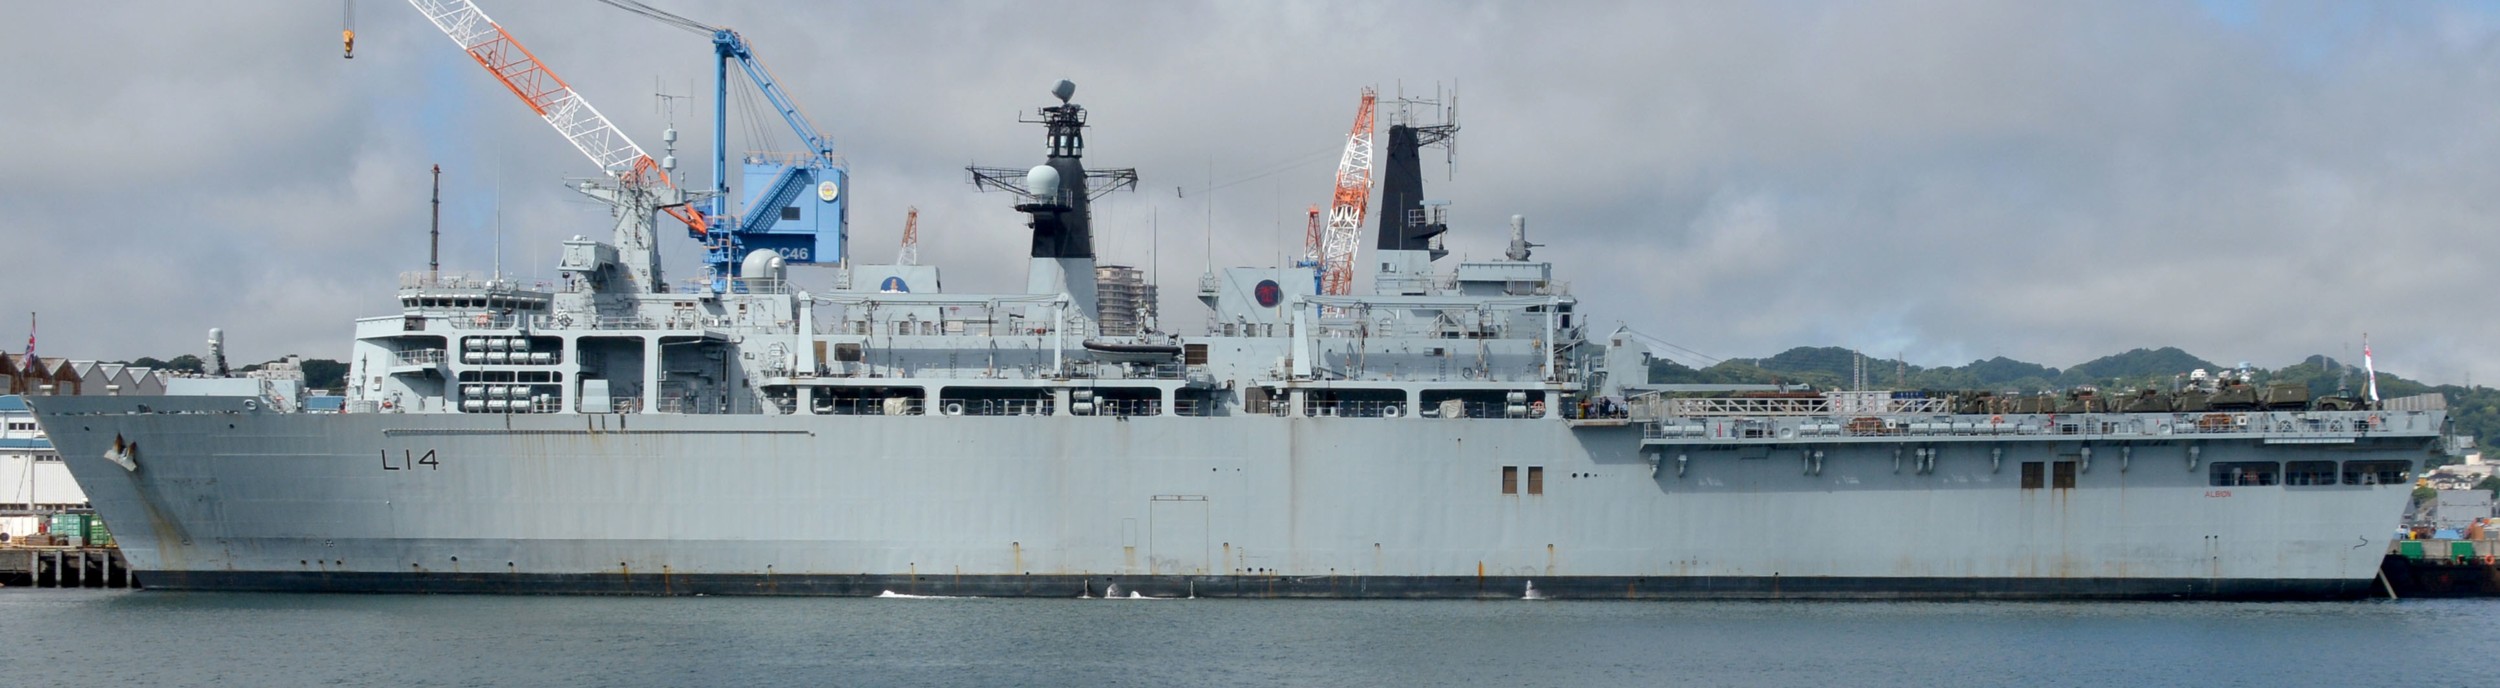 l14 hms albion amphibious transport dock assault ship landing platform lpd royal navy 82